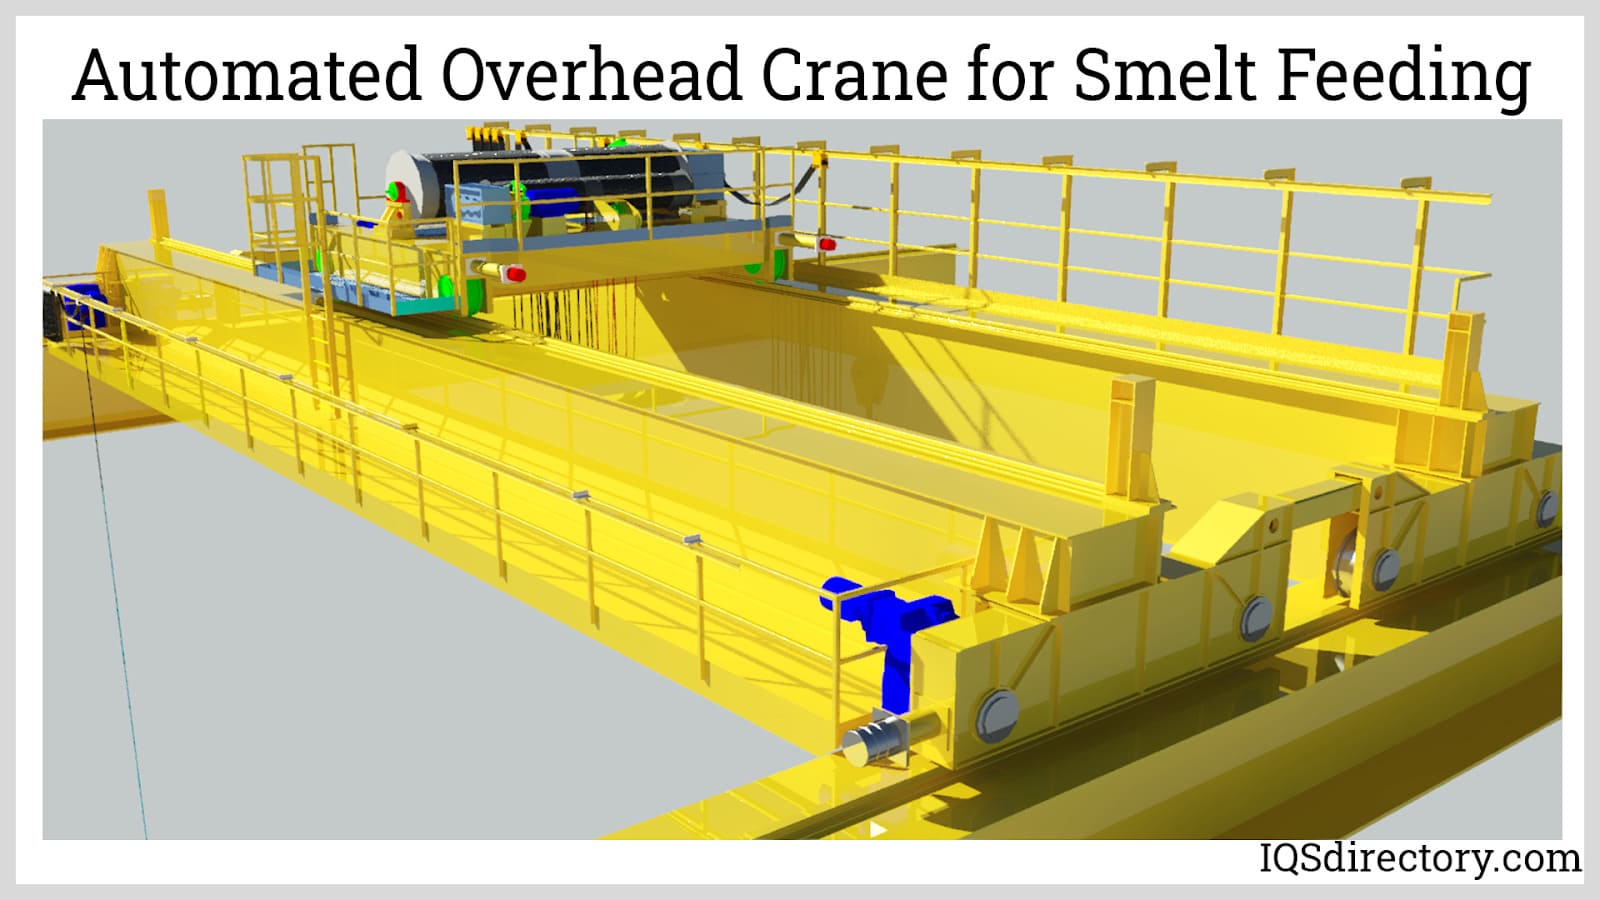 Automated Overhead Crane for Smelt Feeding